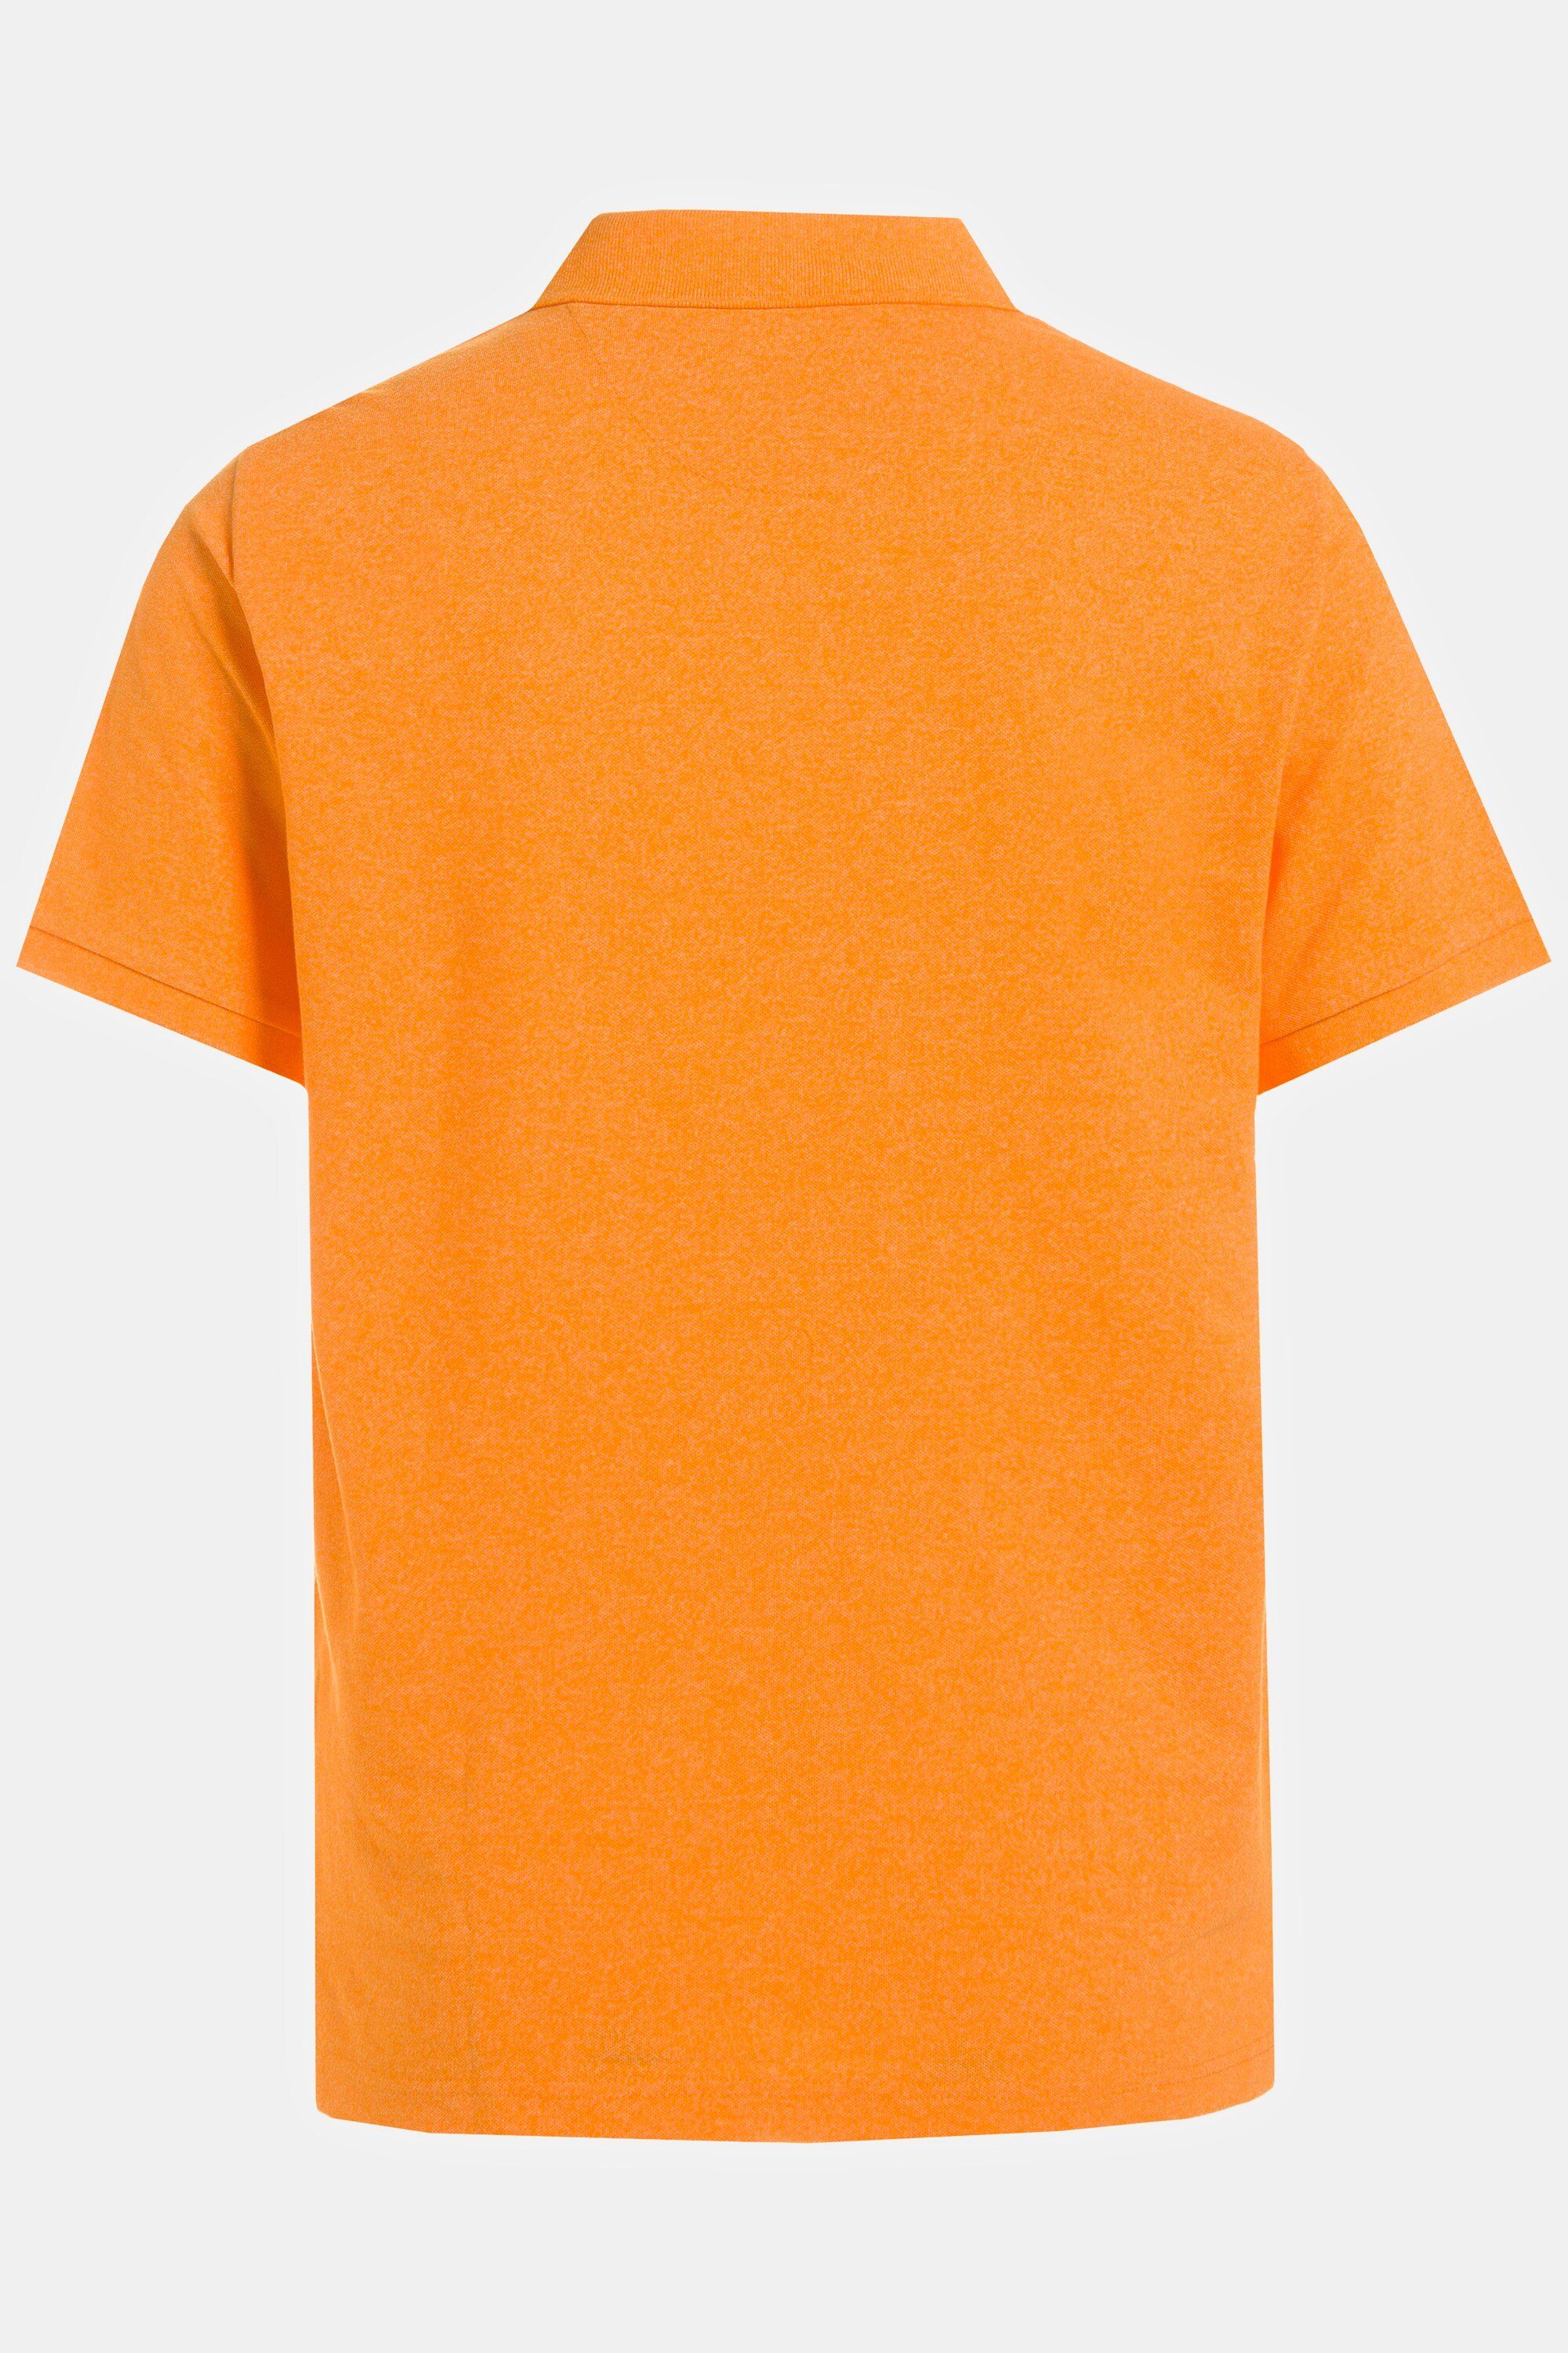 bis 8 XL Piqué orange kräftiges JP1880 Poloshirt Poloshirt Stickerei Halbarm 3D